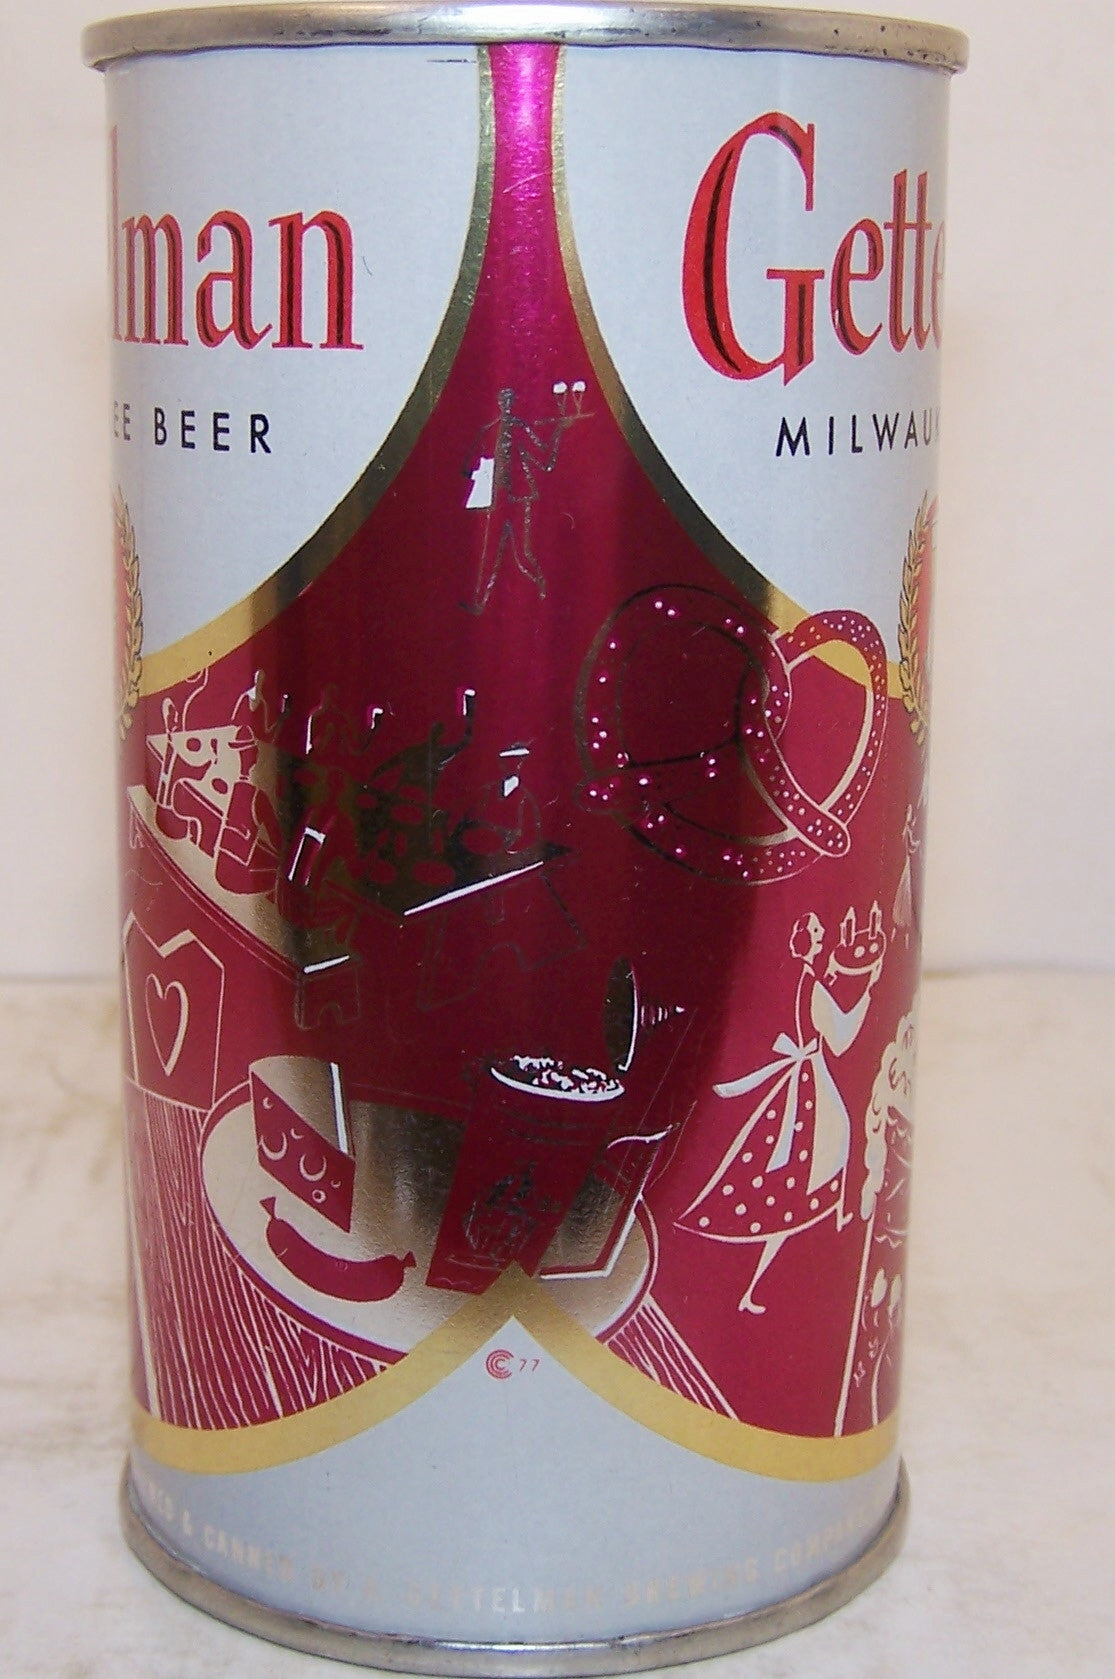 Gettelman "Picnic" Beer, USBC 69-17, Grade 1/1+ Sold on 11/30/14